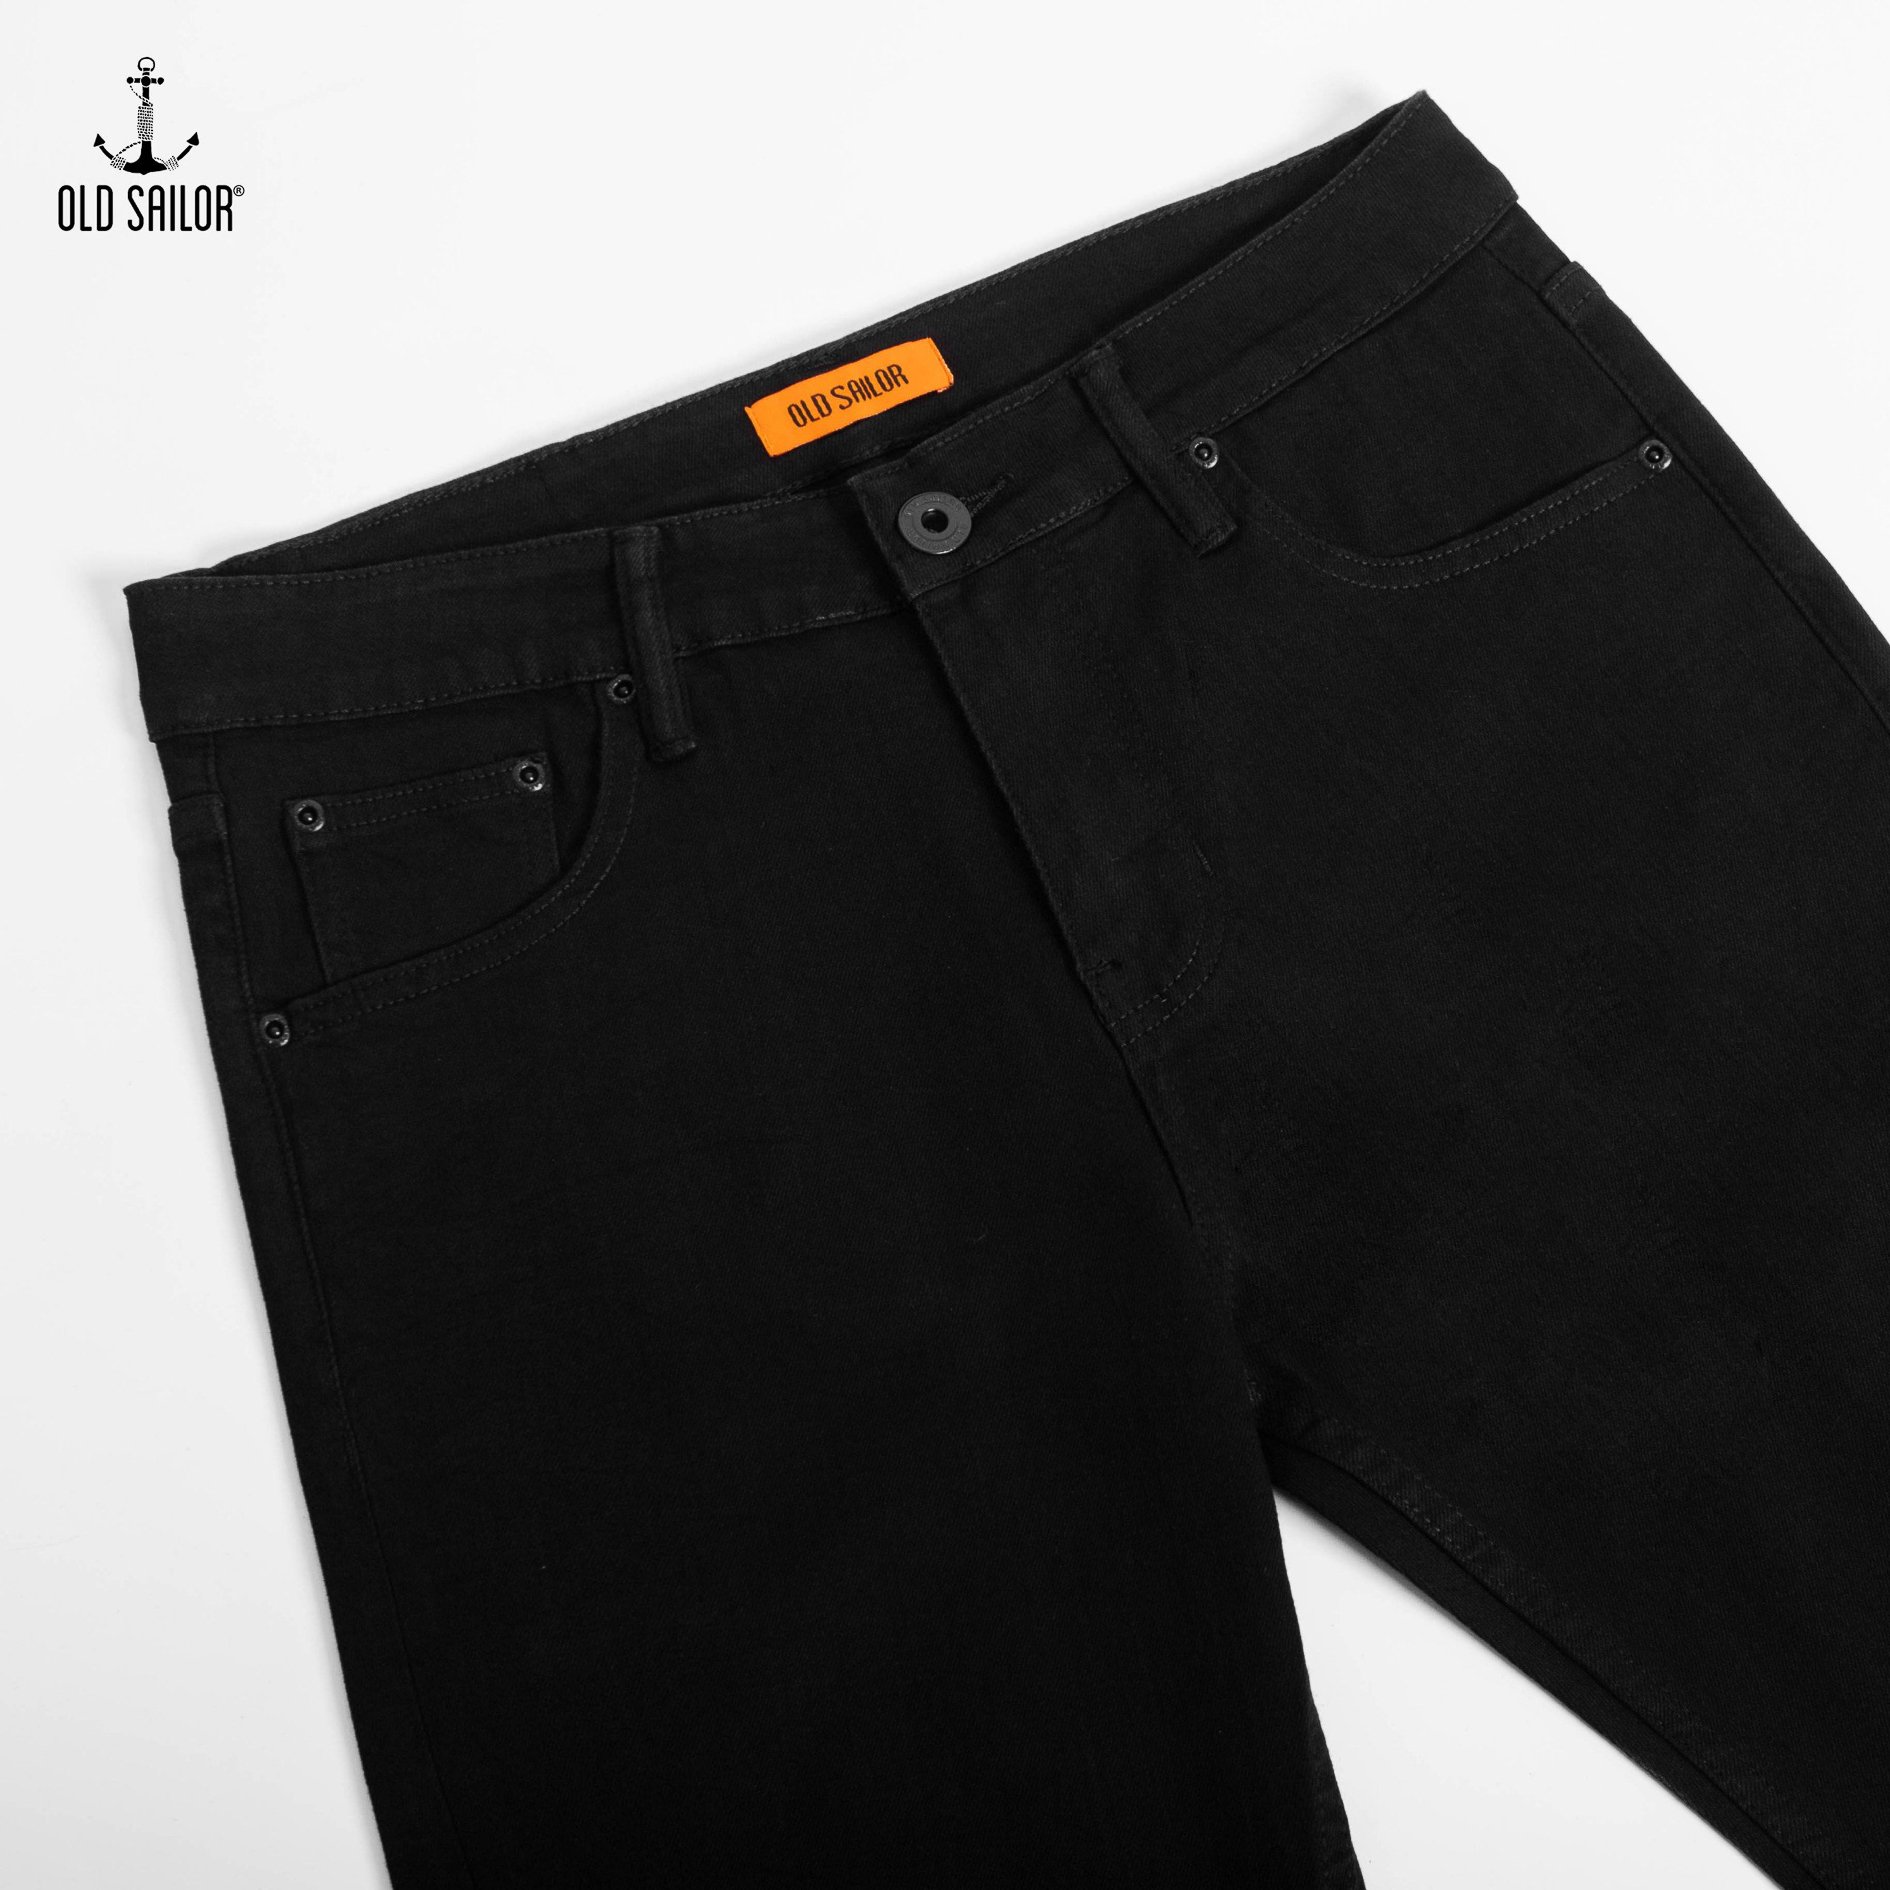 Quần jeans nam premium form skinny Old Sailor - 6749 - đen trơn - Big size upto 42